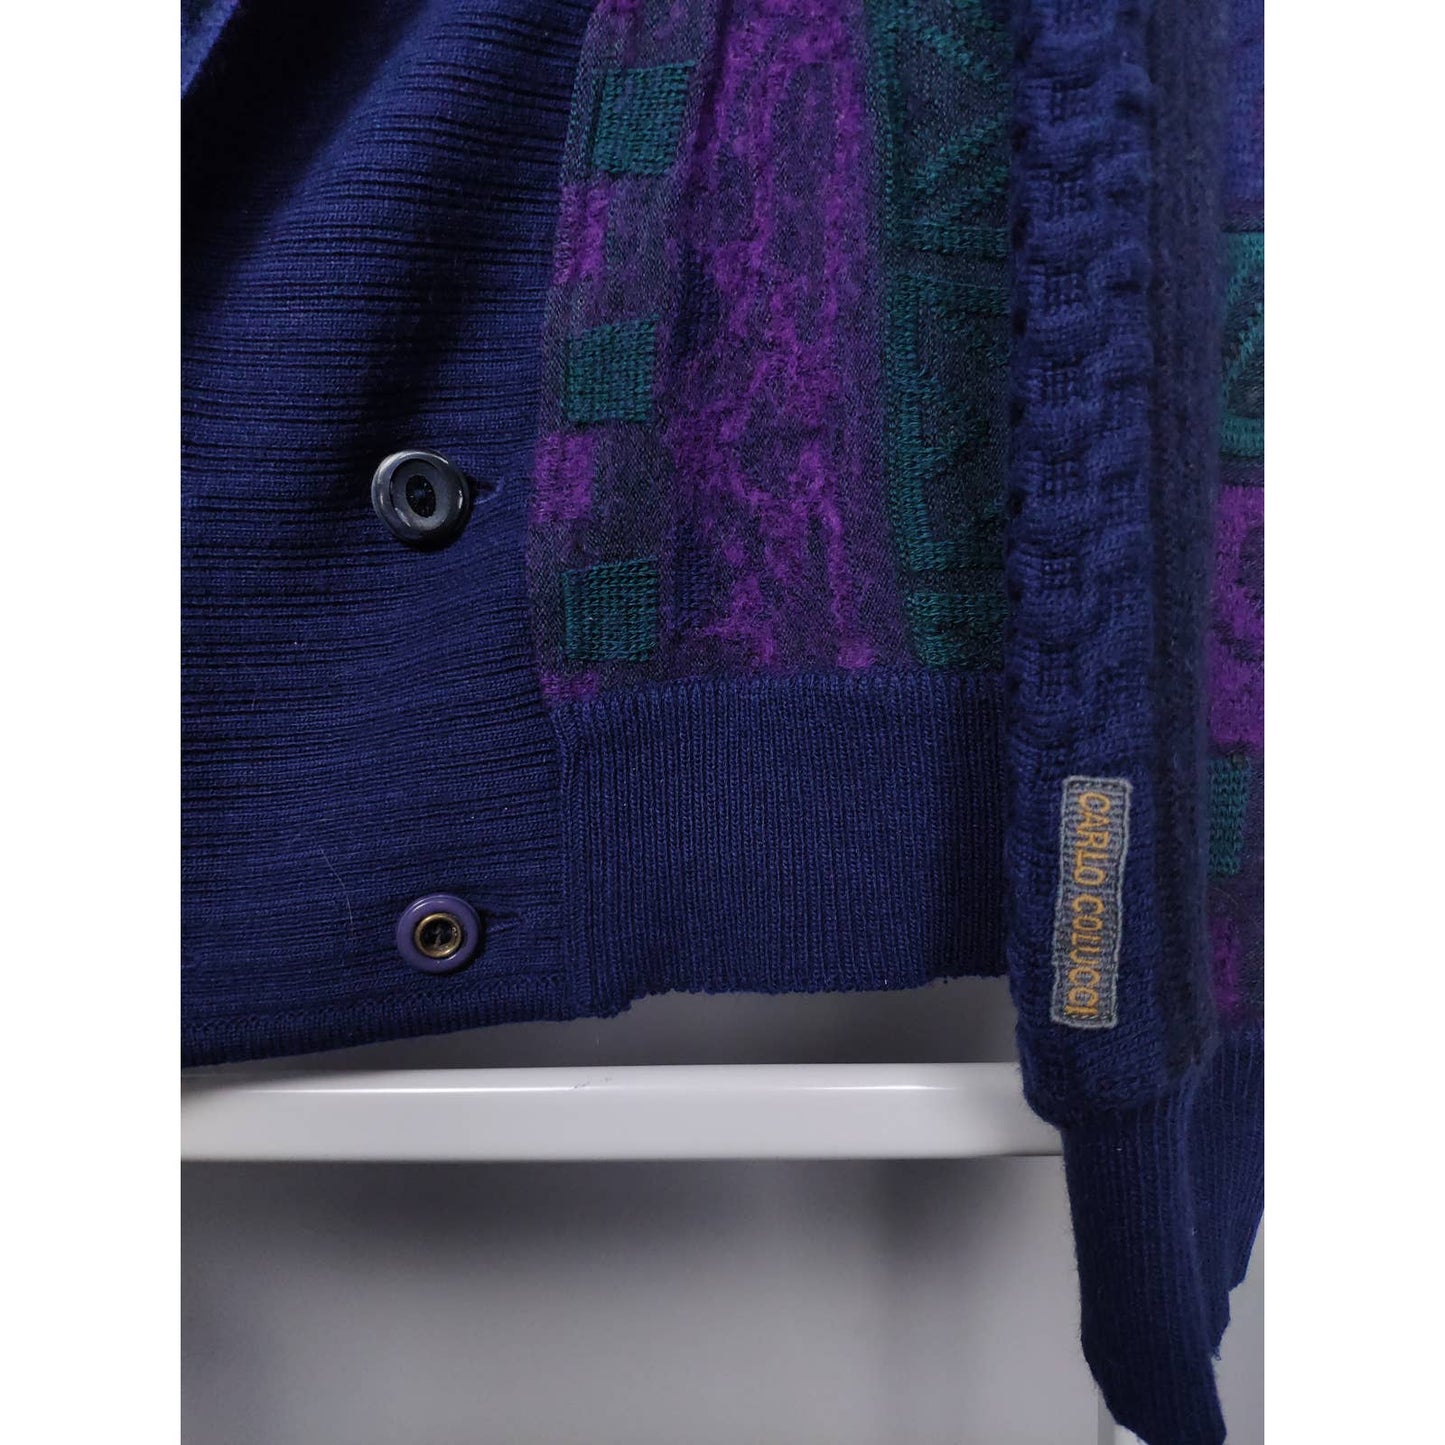 Carlo Colucci vintage cardigan multicolor COOGI type knit